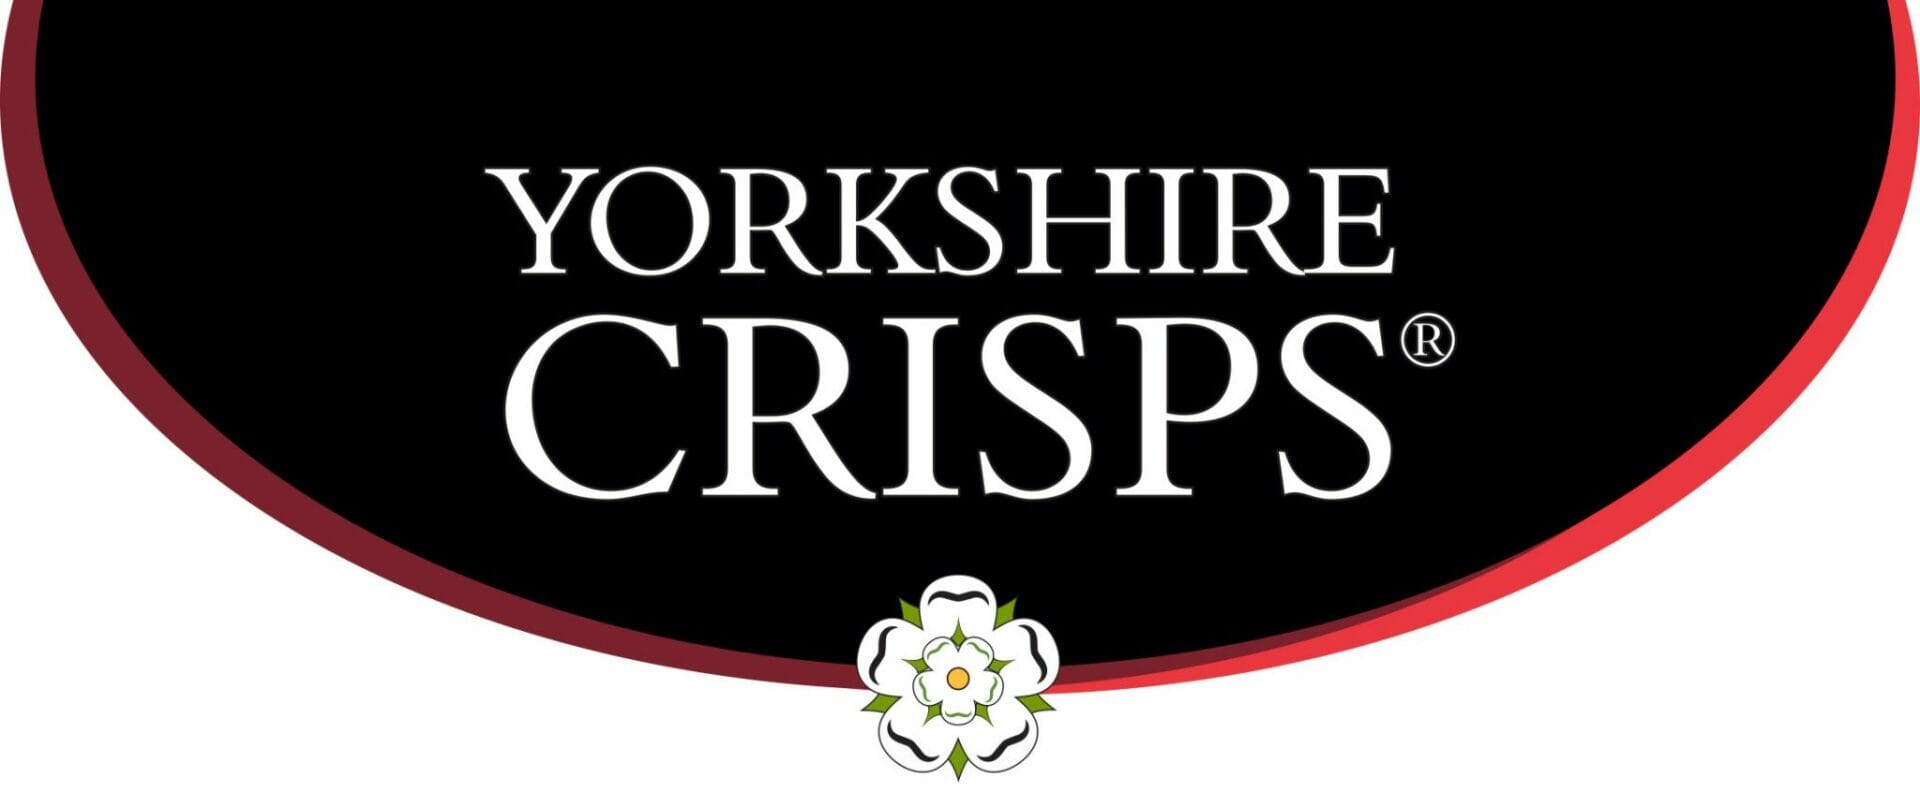 The Yorkshire Crisp Company